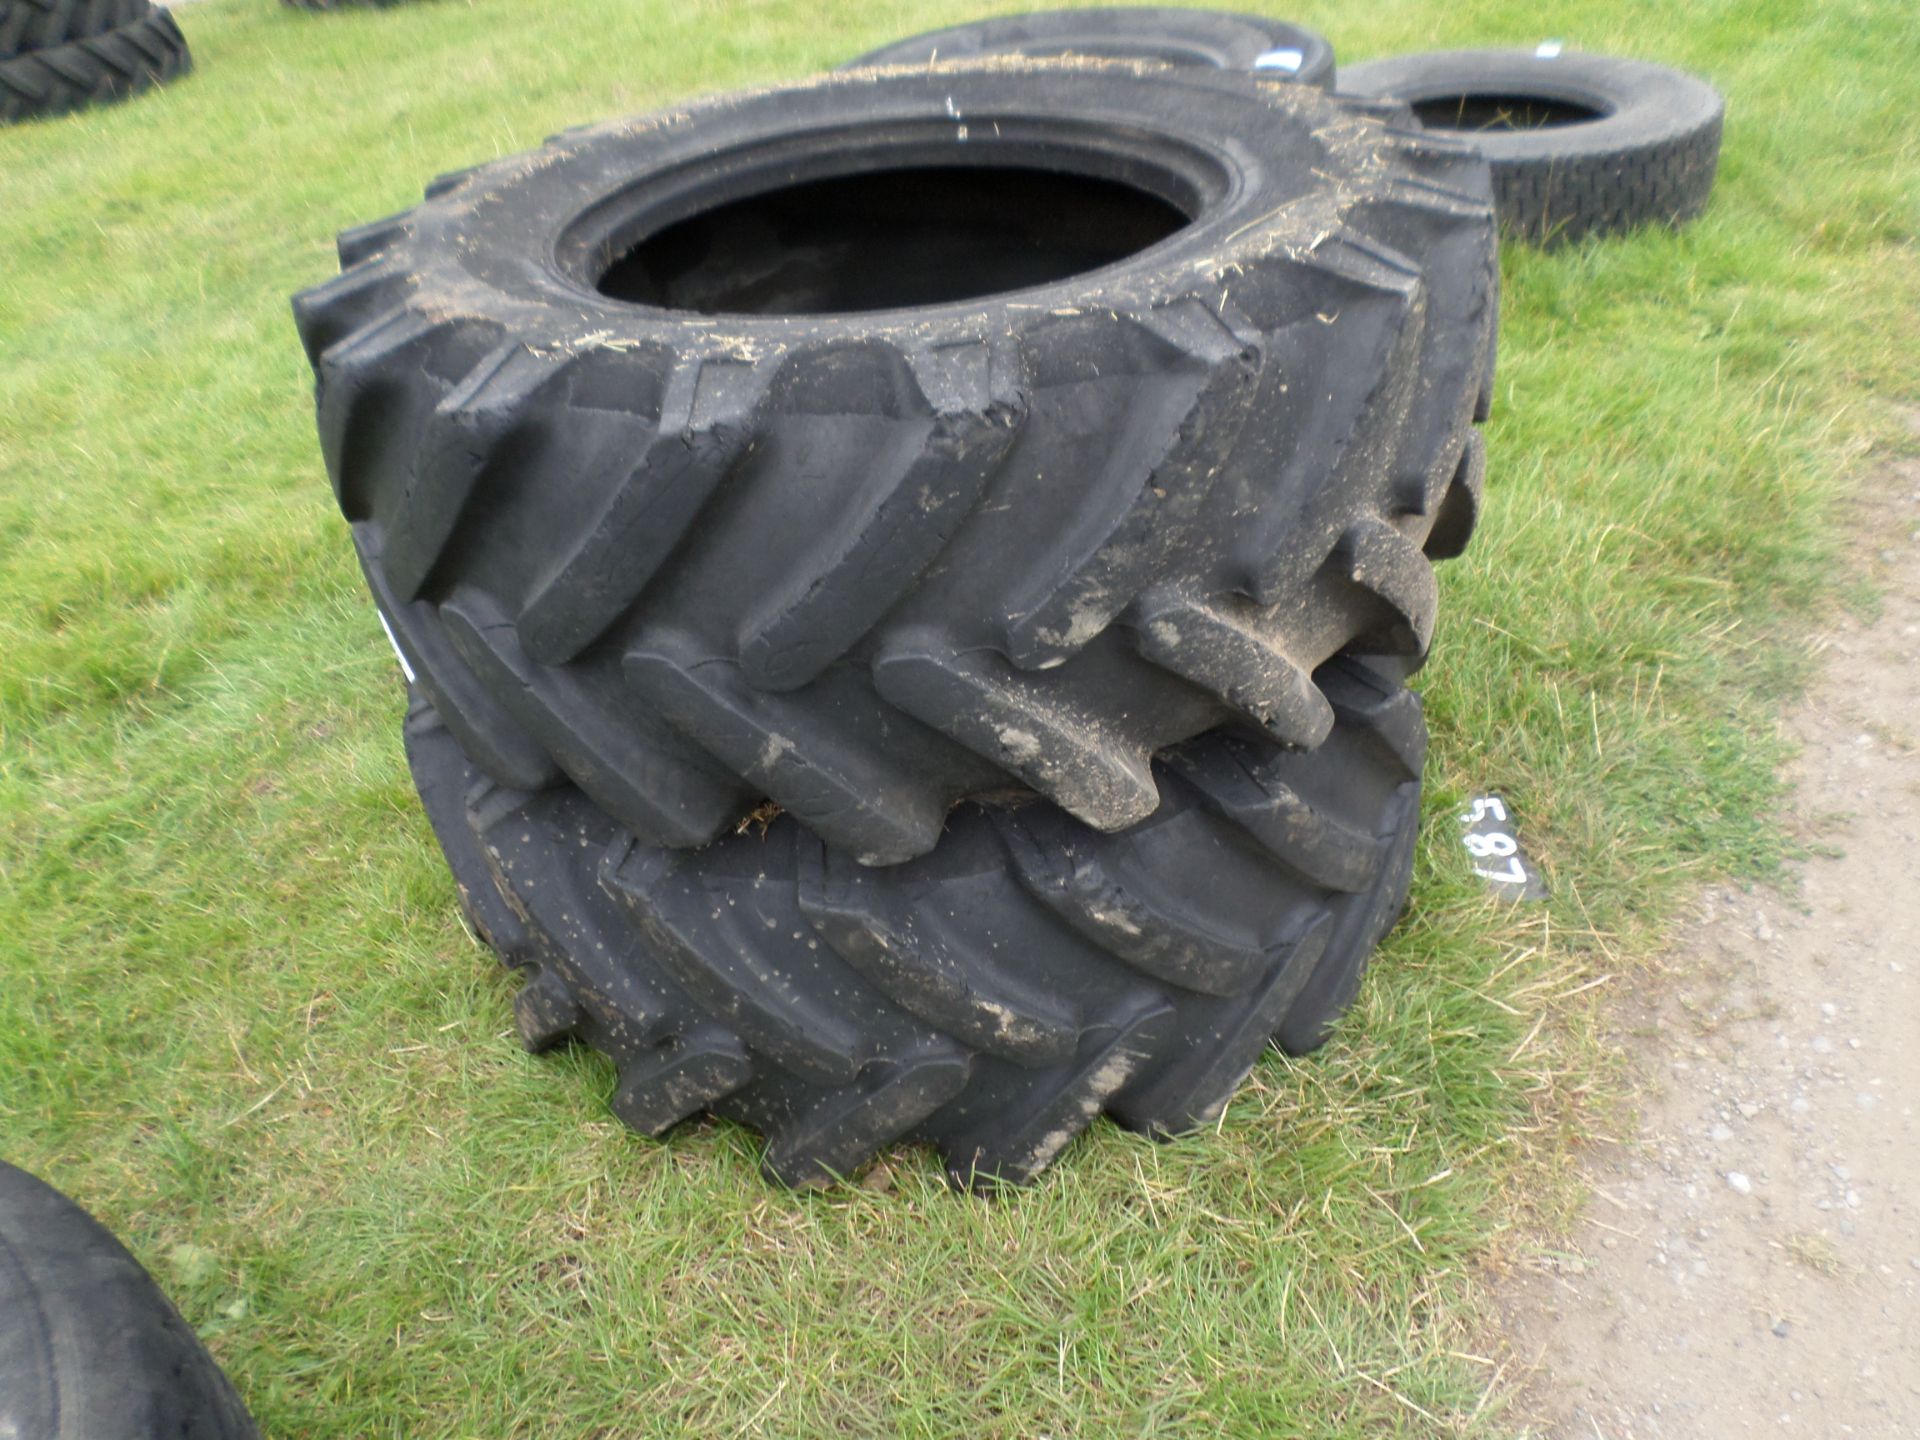 Pair of 17.5 x 24 JCB teleporter tyres